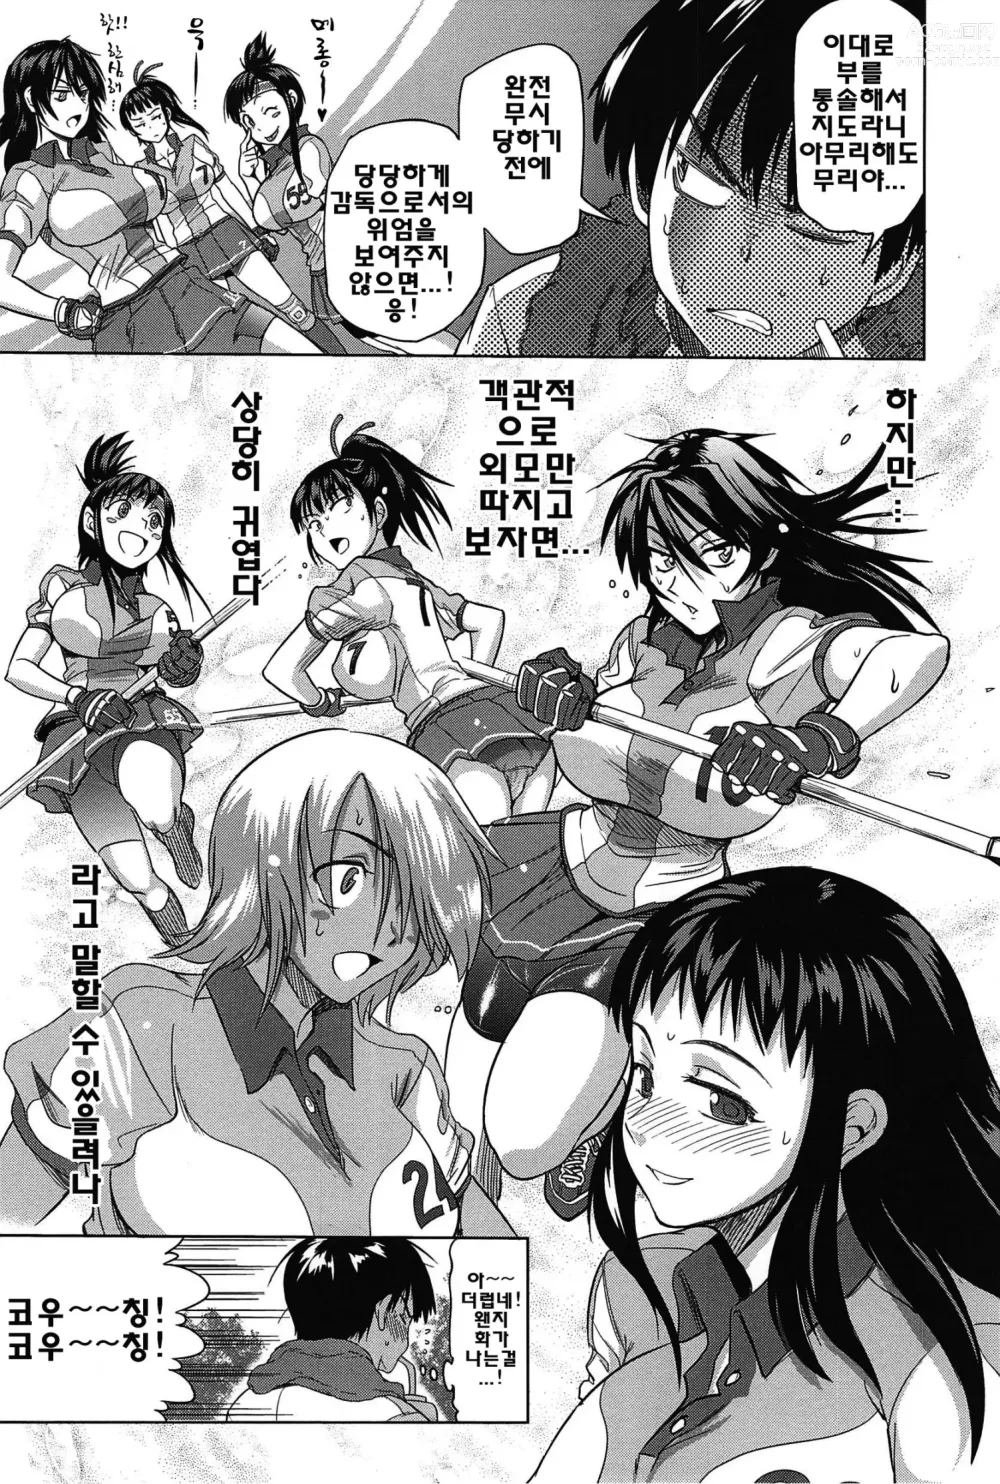 Page 13 of manga Joshi Luck!